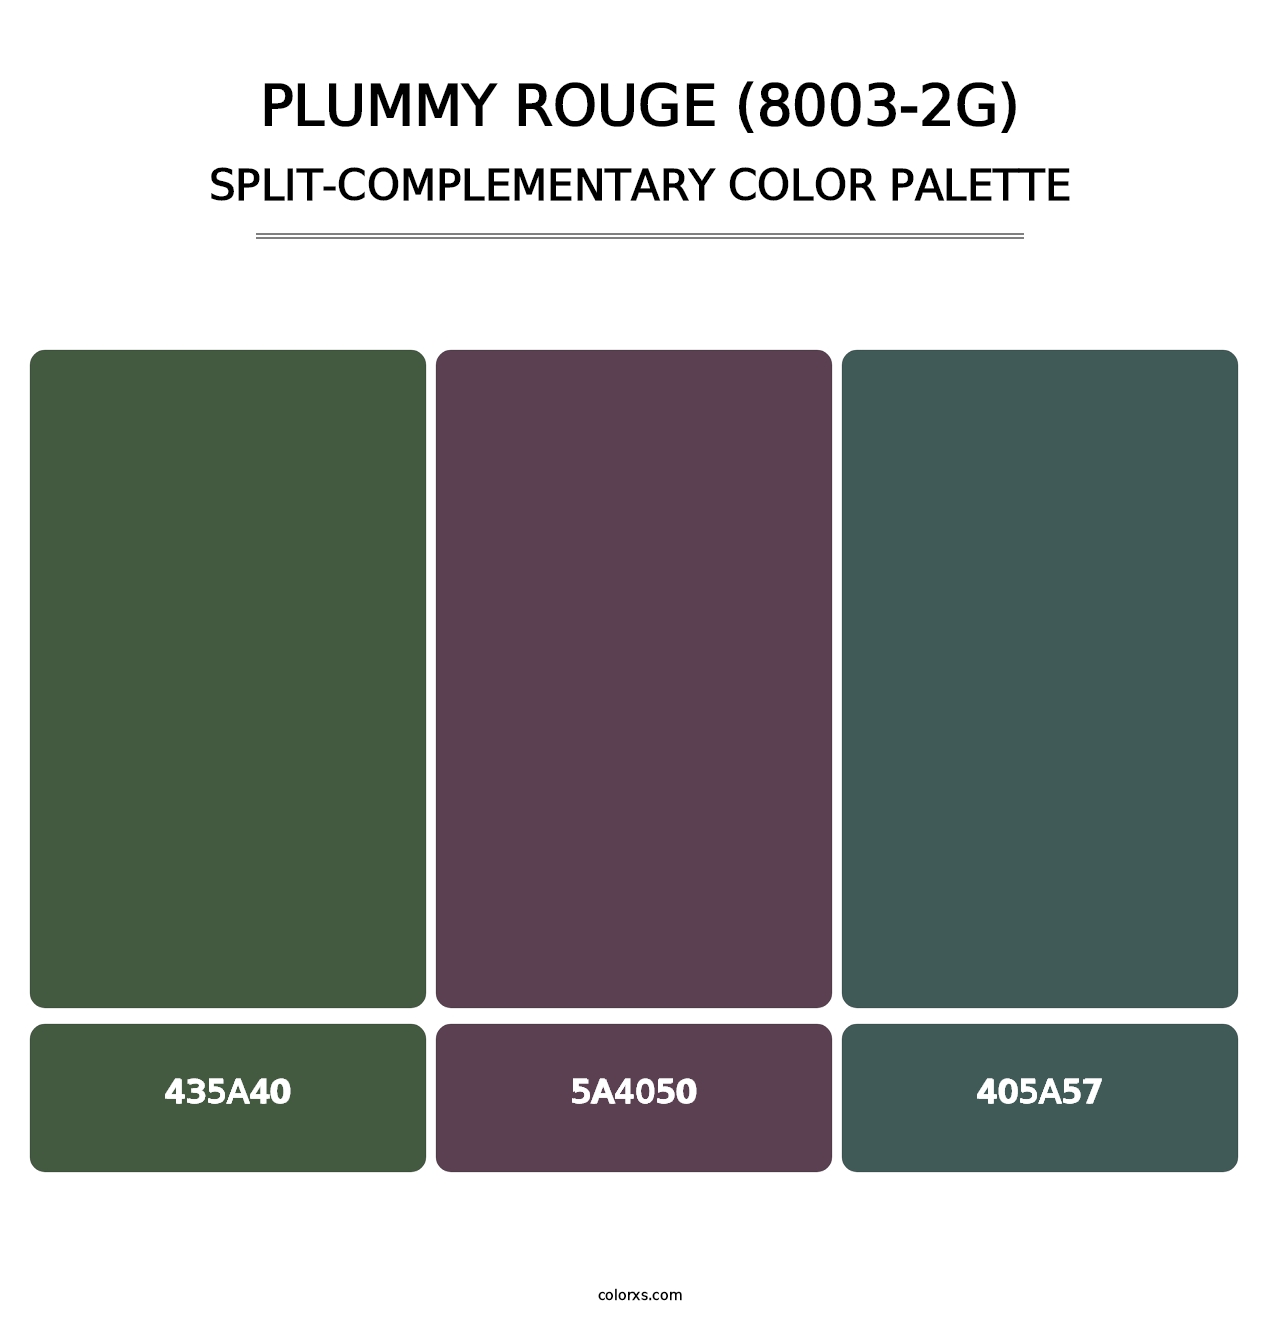 Plummy Rouge (8003-2G) - Split-Complementary Color Palette